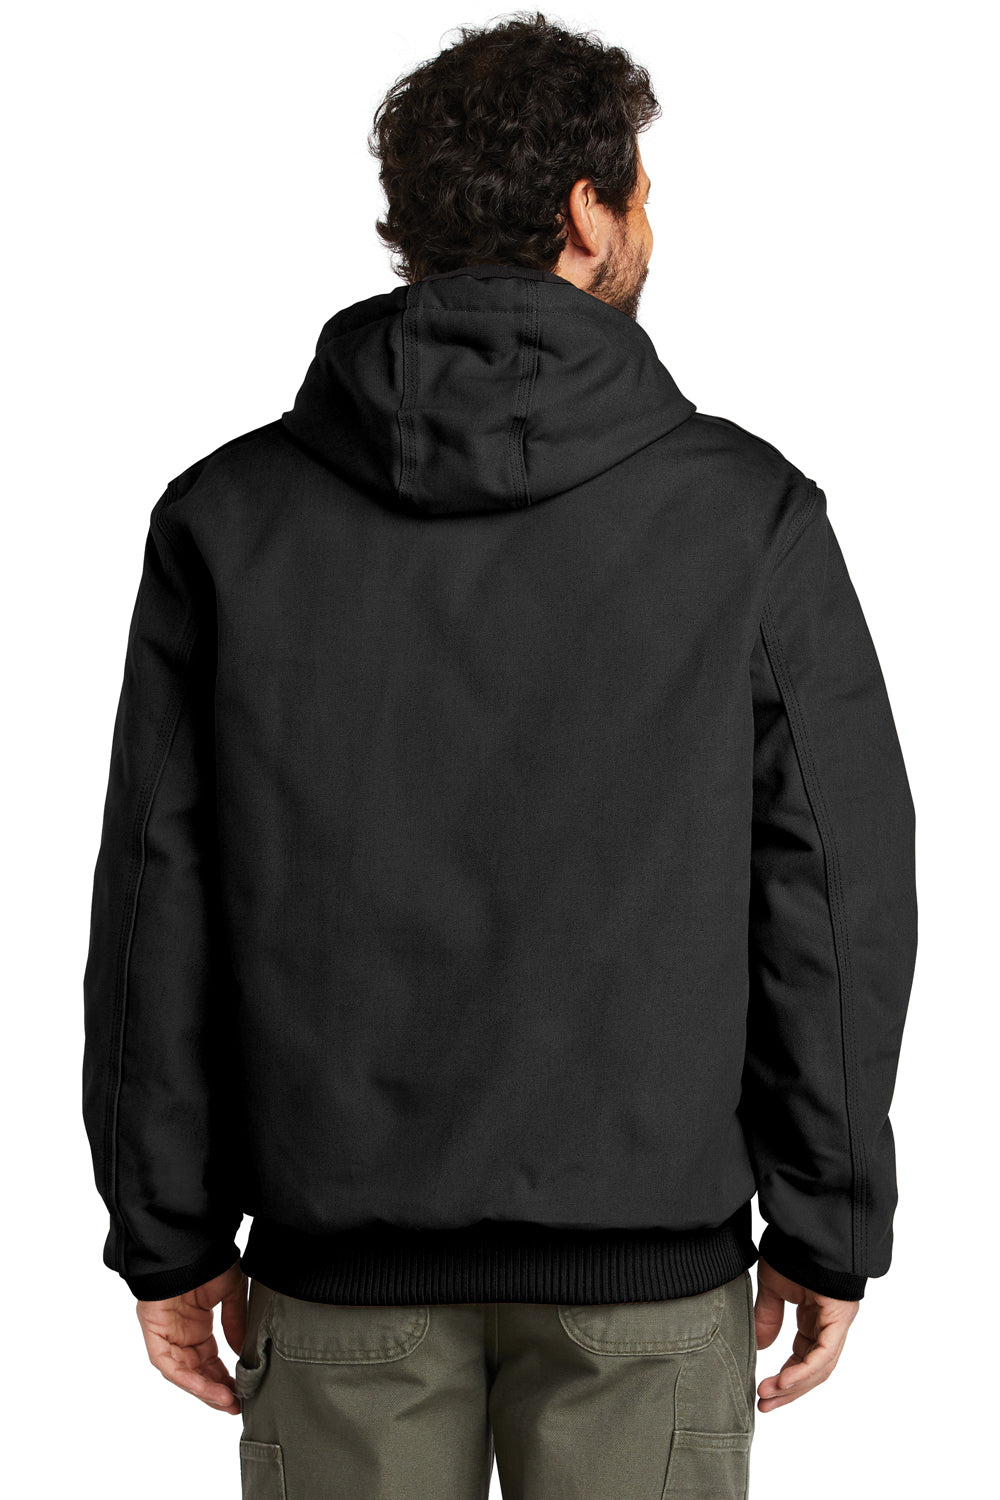 Carhartt CTSJ140/CTTSJ140 Mens Wind & Water Resistant Duck Cloth Full Zip Hooded Work Jacket Black Model Back